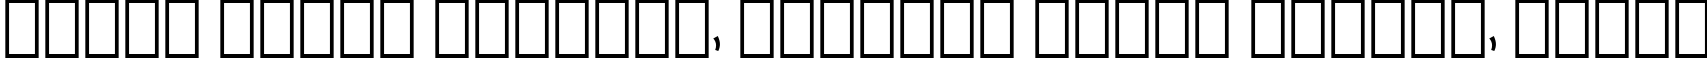 Пример написания шрифтом Matisse ITC текста на белорусском